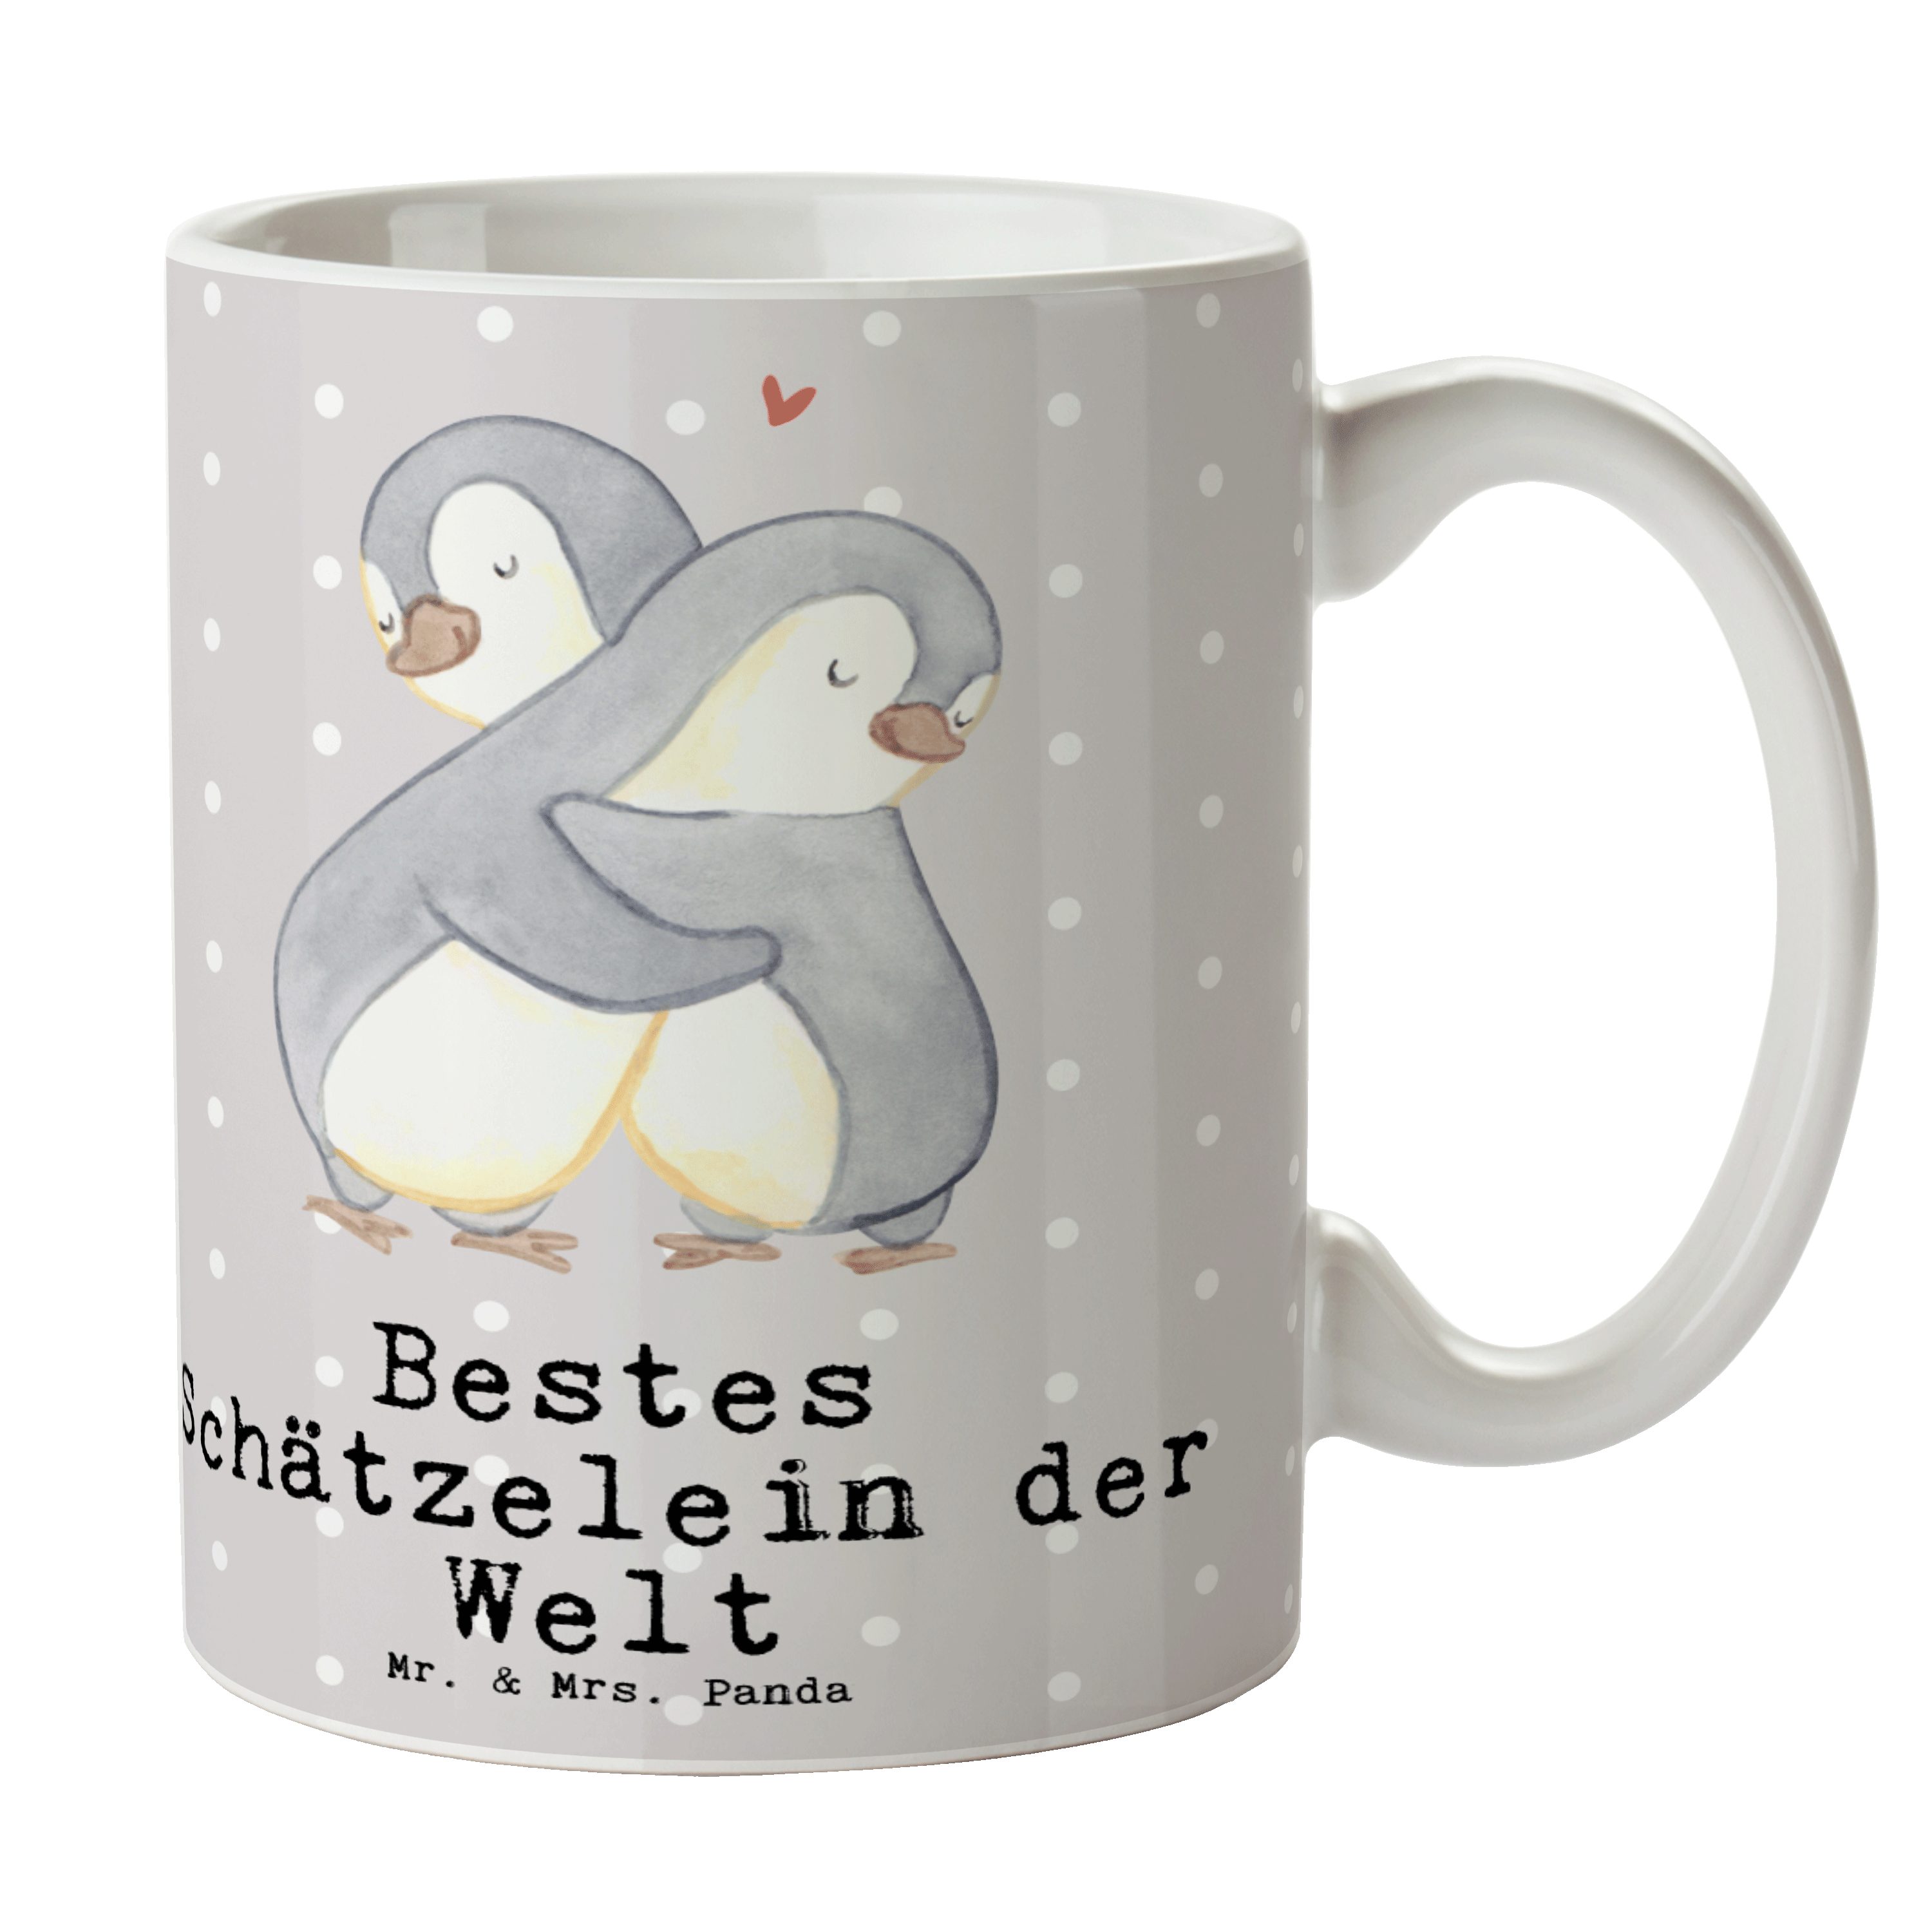 Panda Keramik Welt der Bestes - & - Grau Geschenk, Pastell Schätzelein Gesche, Mr. Mrs. Pinguin Tasse